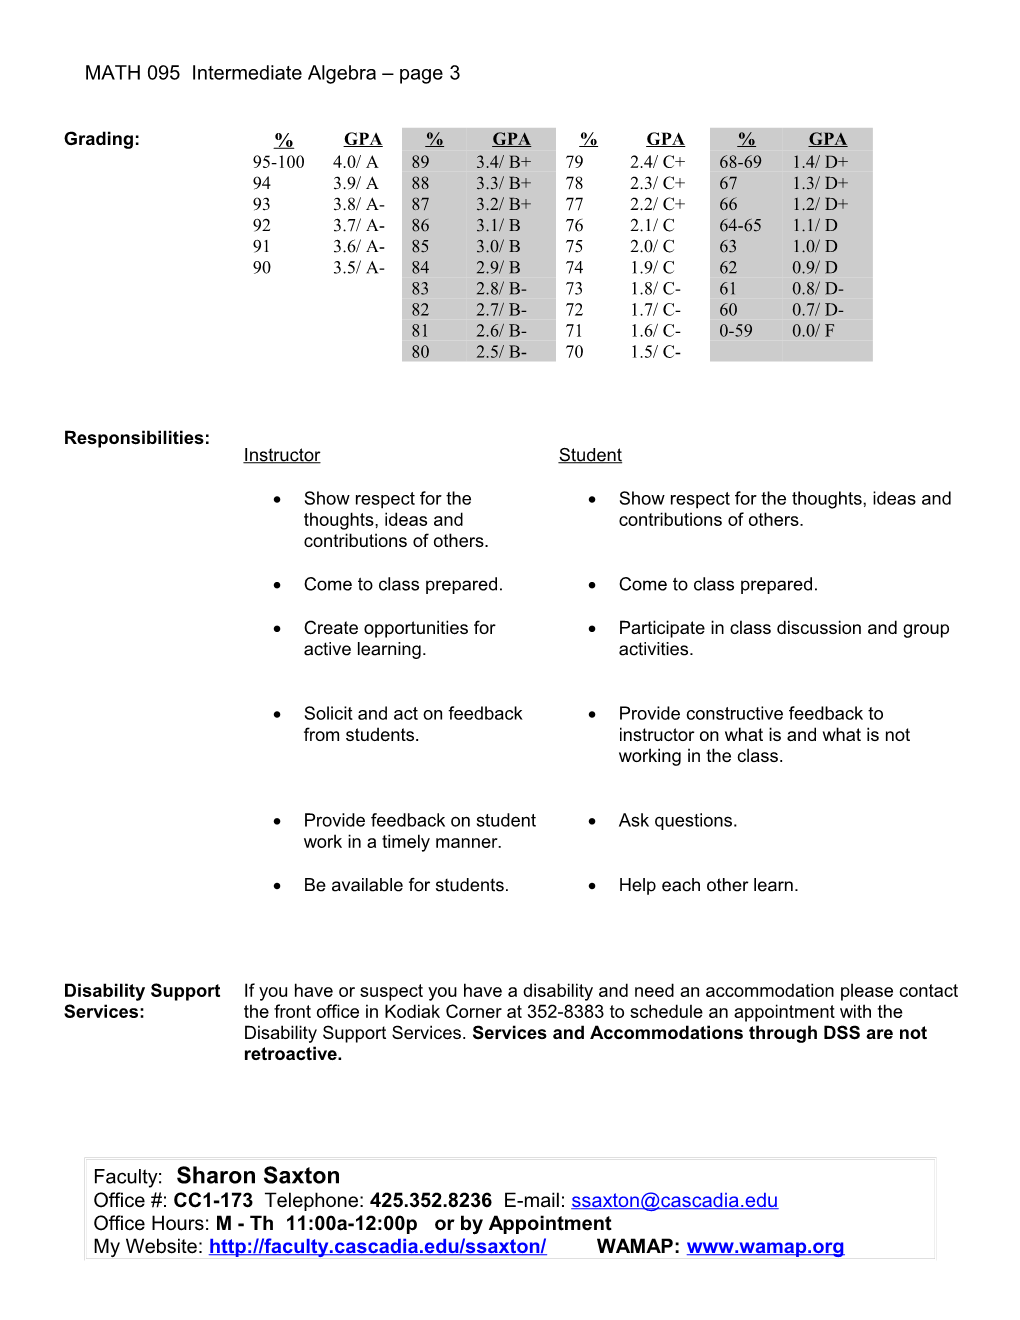 MATH 095 Intermediate Algebra Page 1